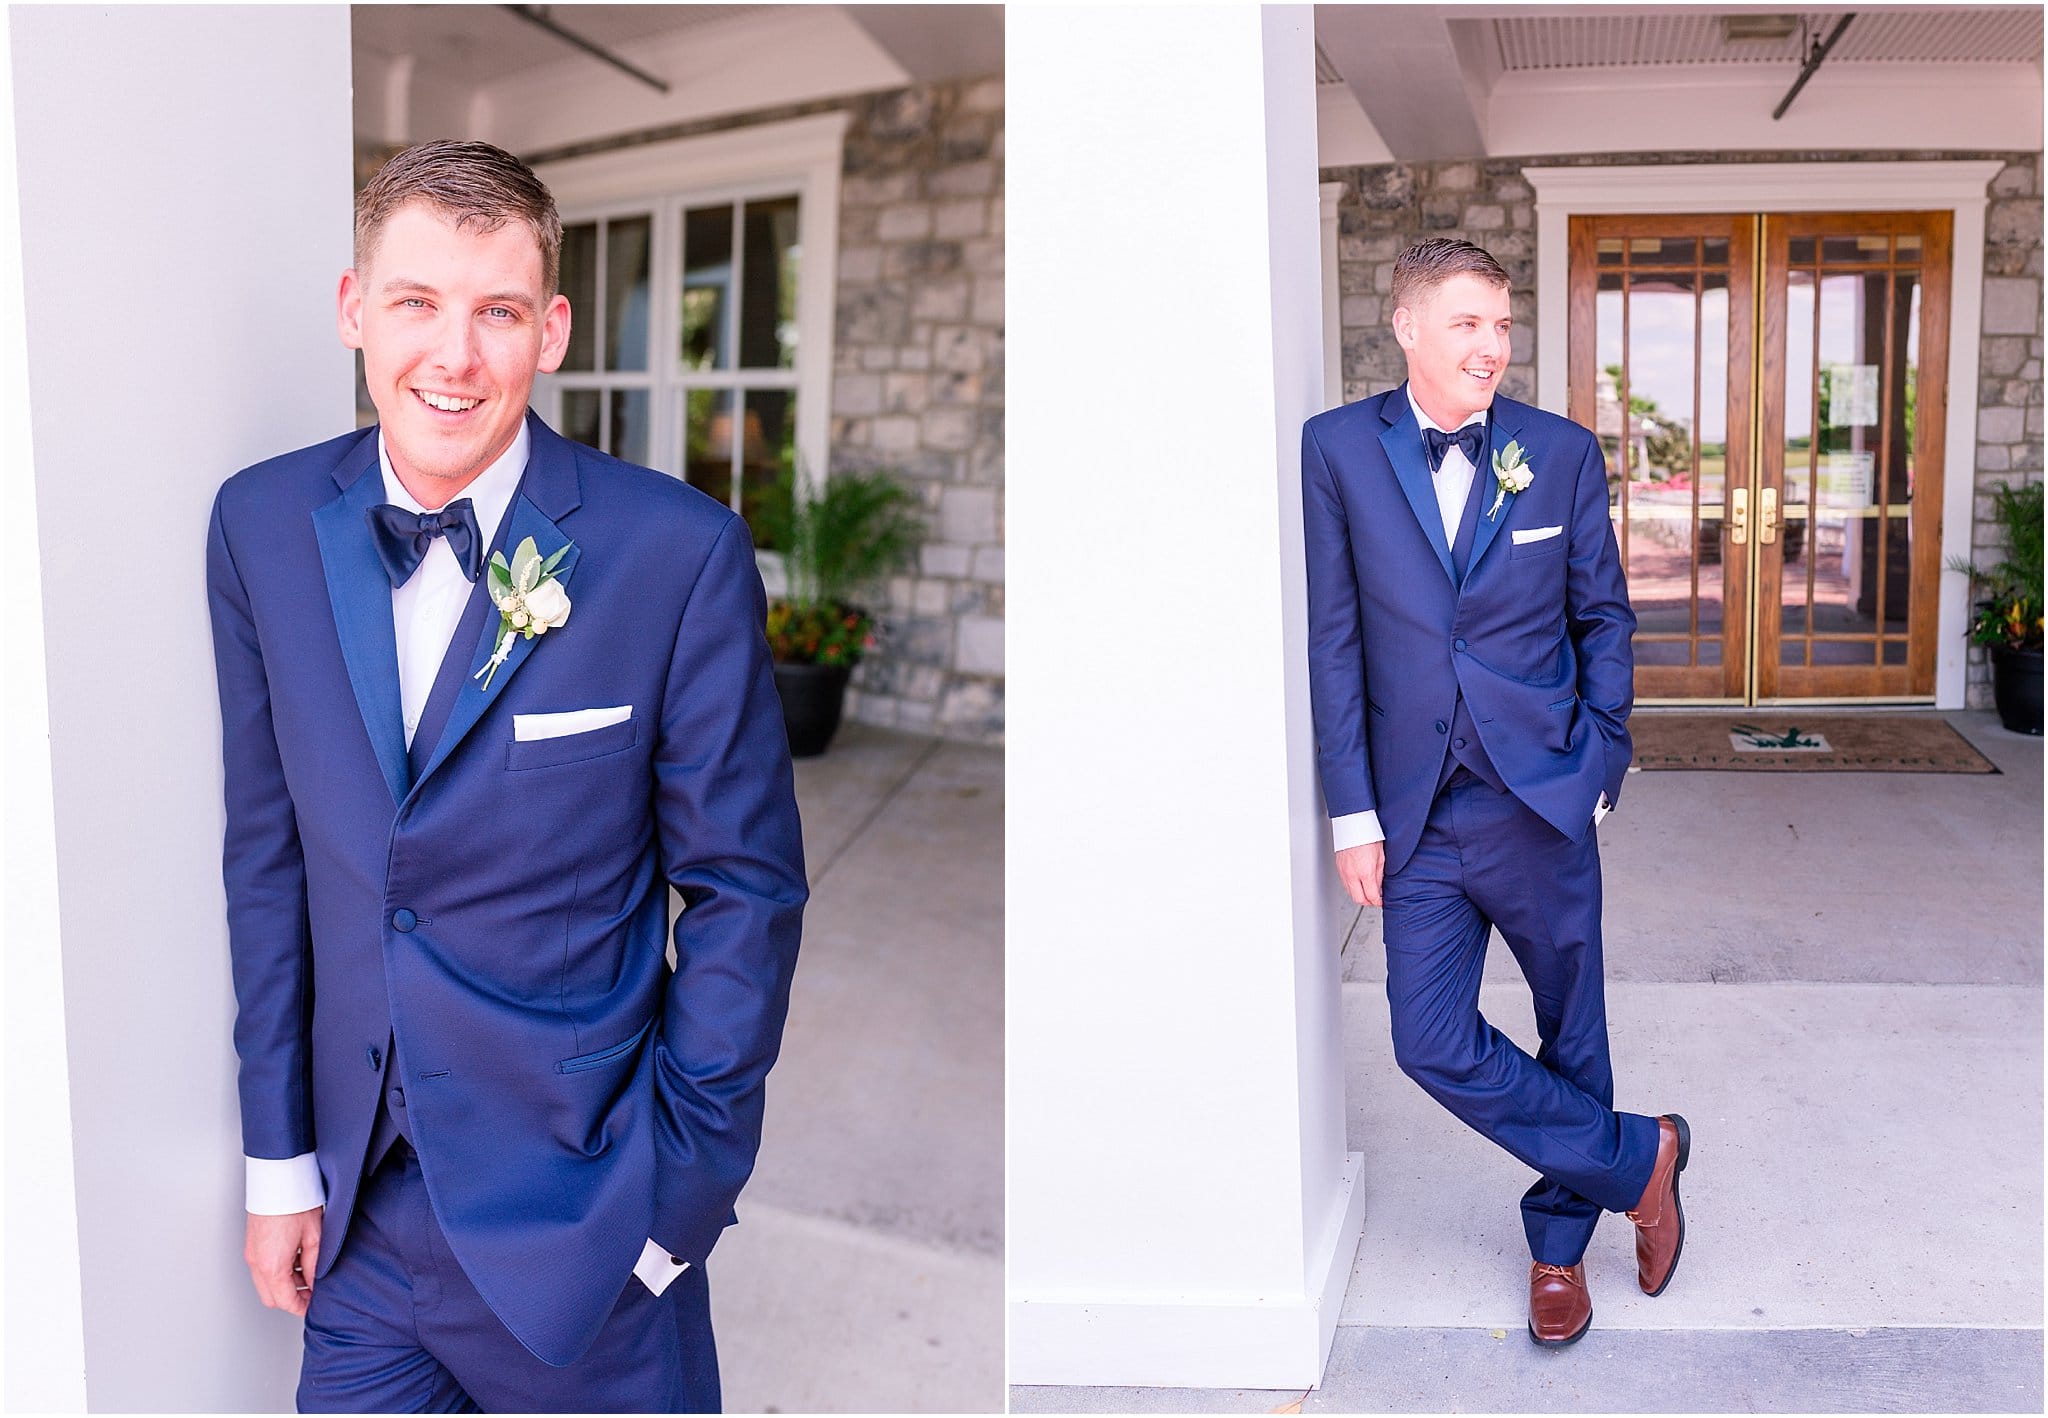 Weddings - Cassidy MR. Photography | Maryland Wedding Photographer ...